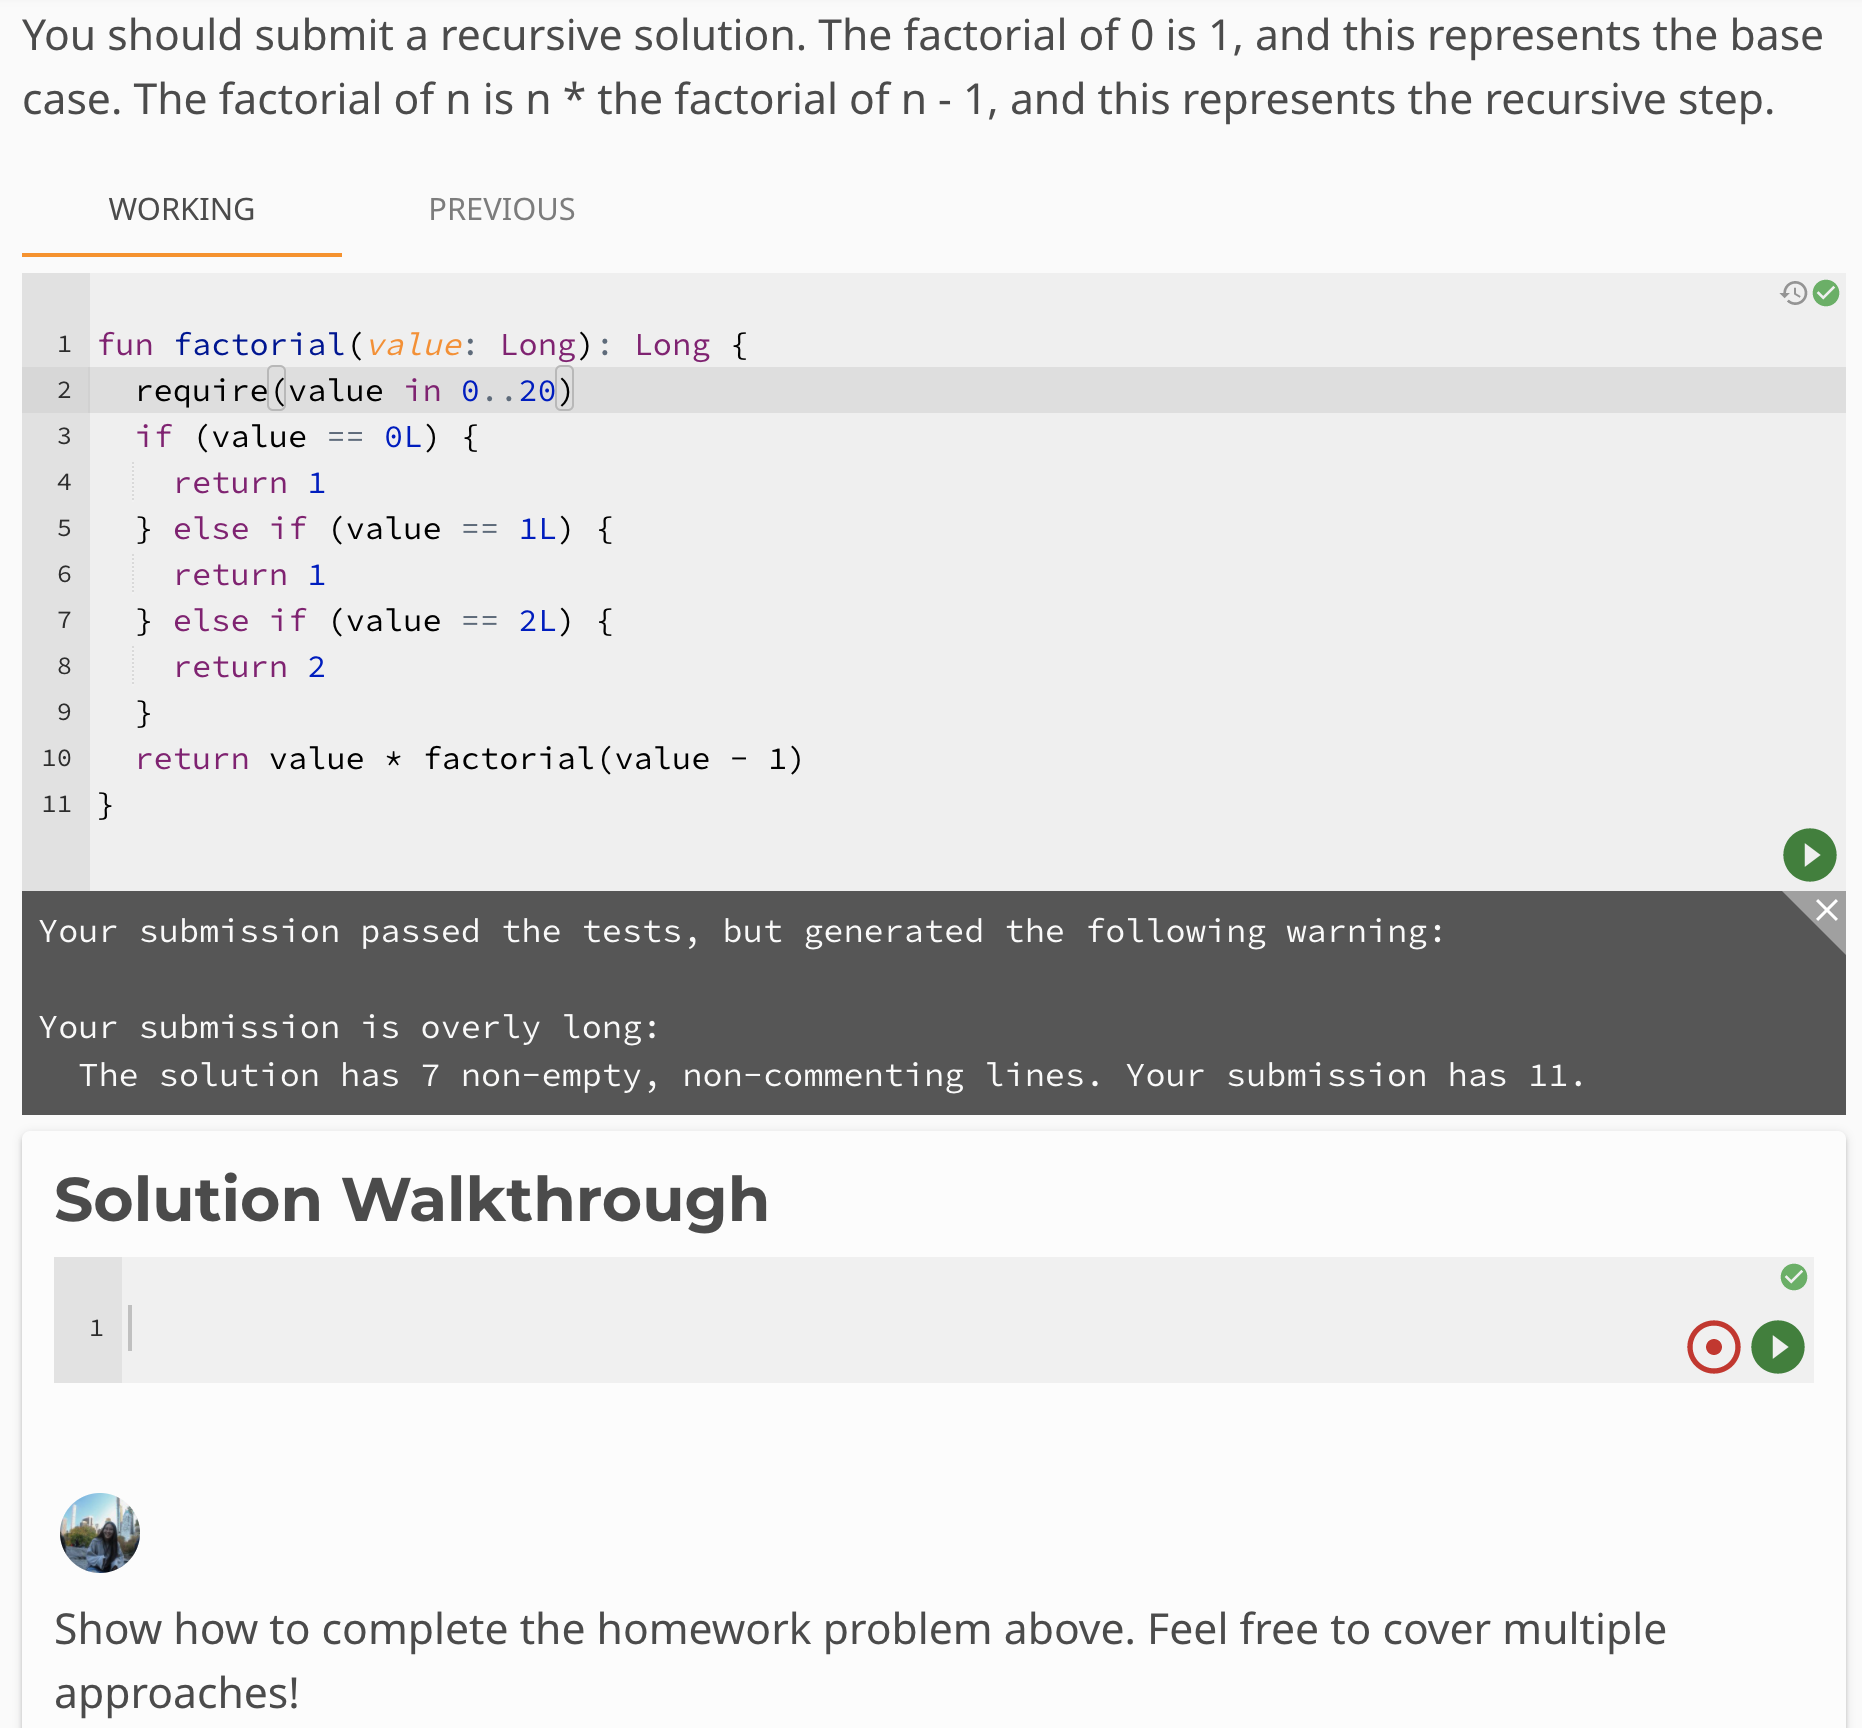 Screenshot showing homework problem and solution walkthrough